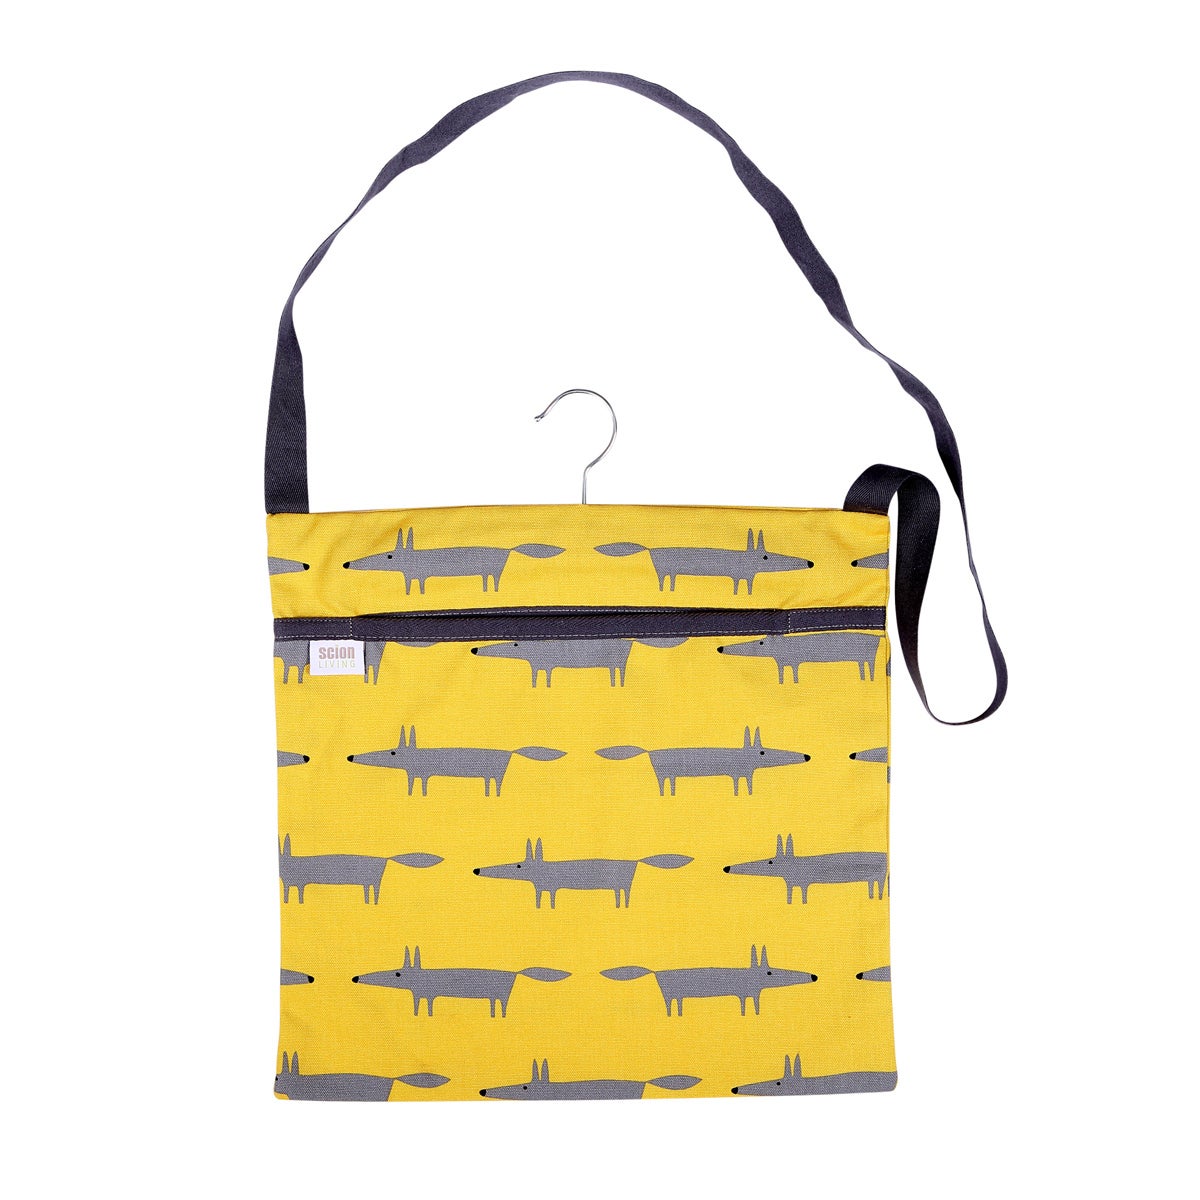 Scion Mr Fox Wipe Clean Peg Bag, Yellow